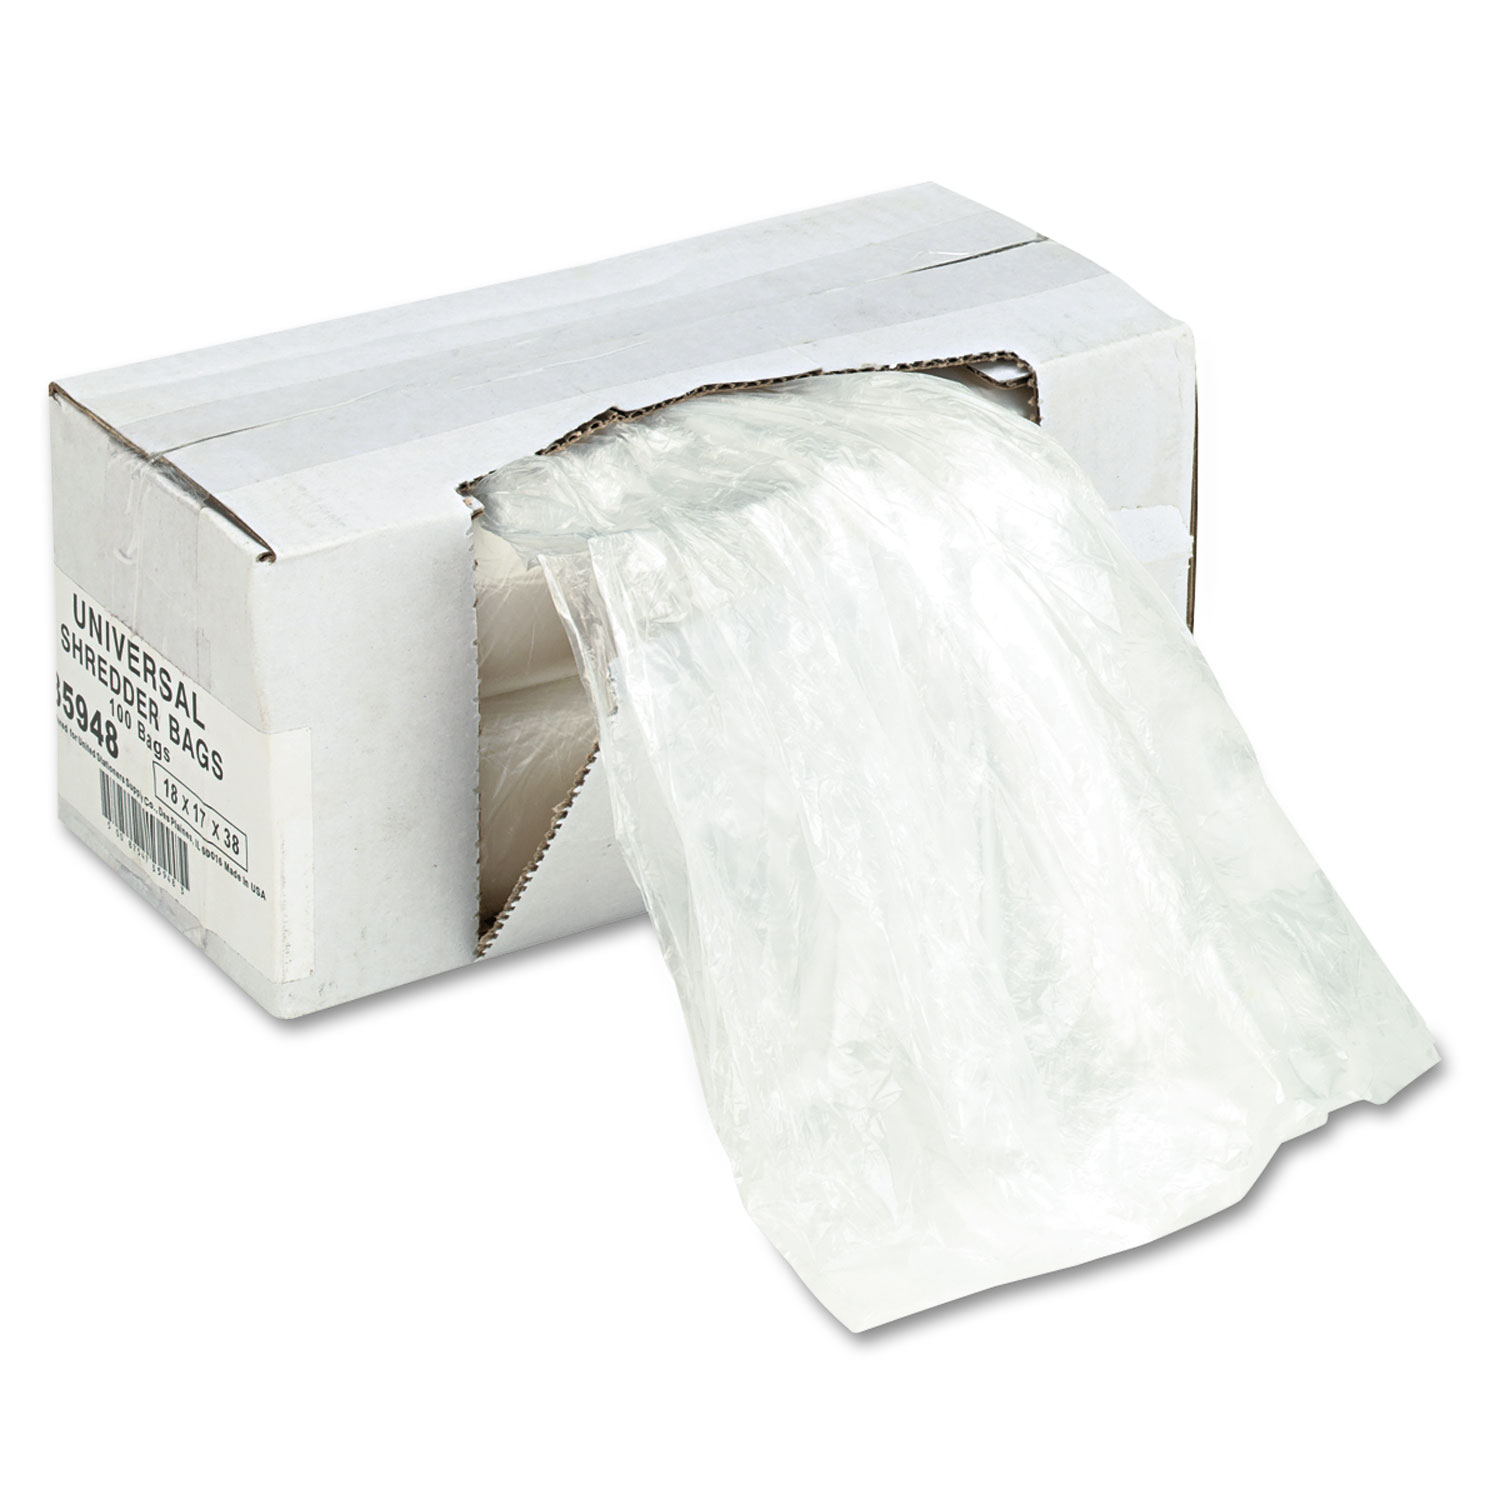 High-Density Shredder Bags, 25-33 gal Capacity, 100/Box